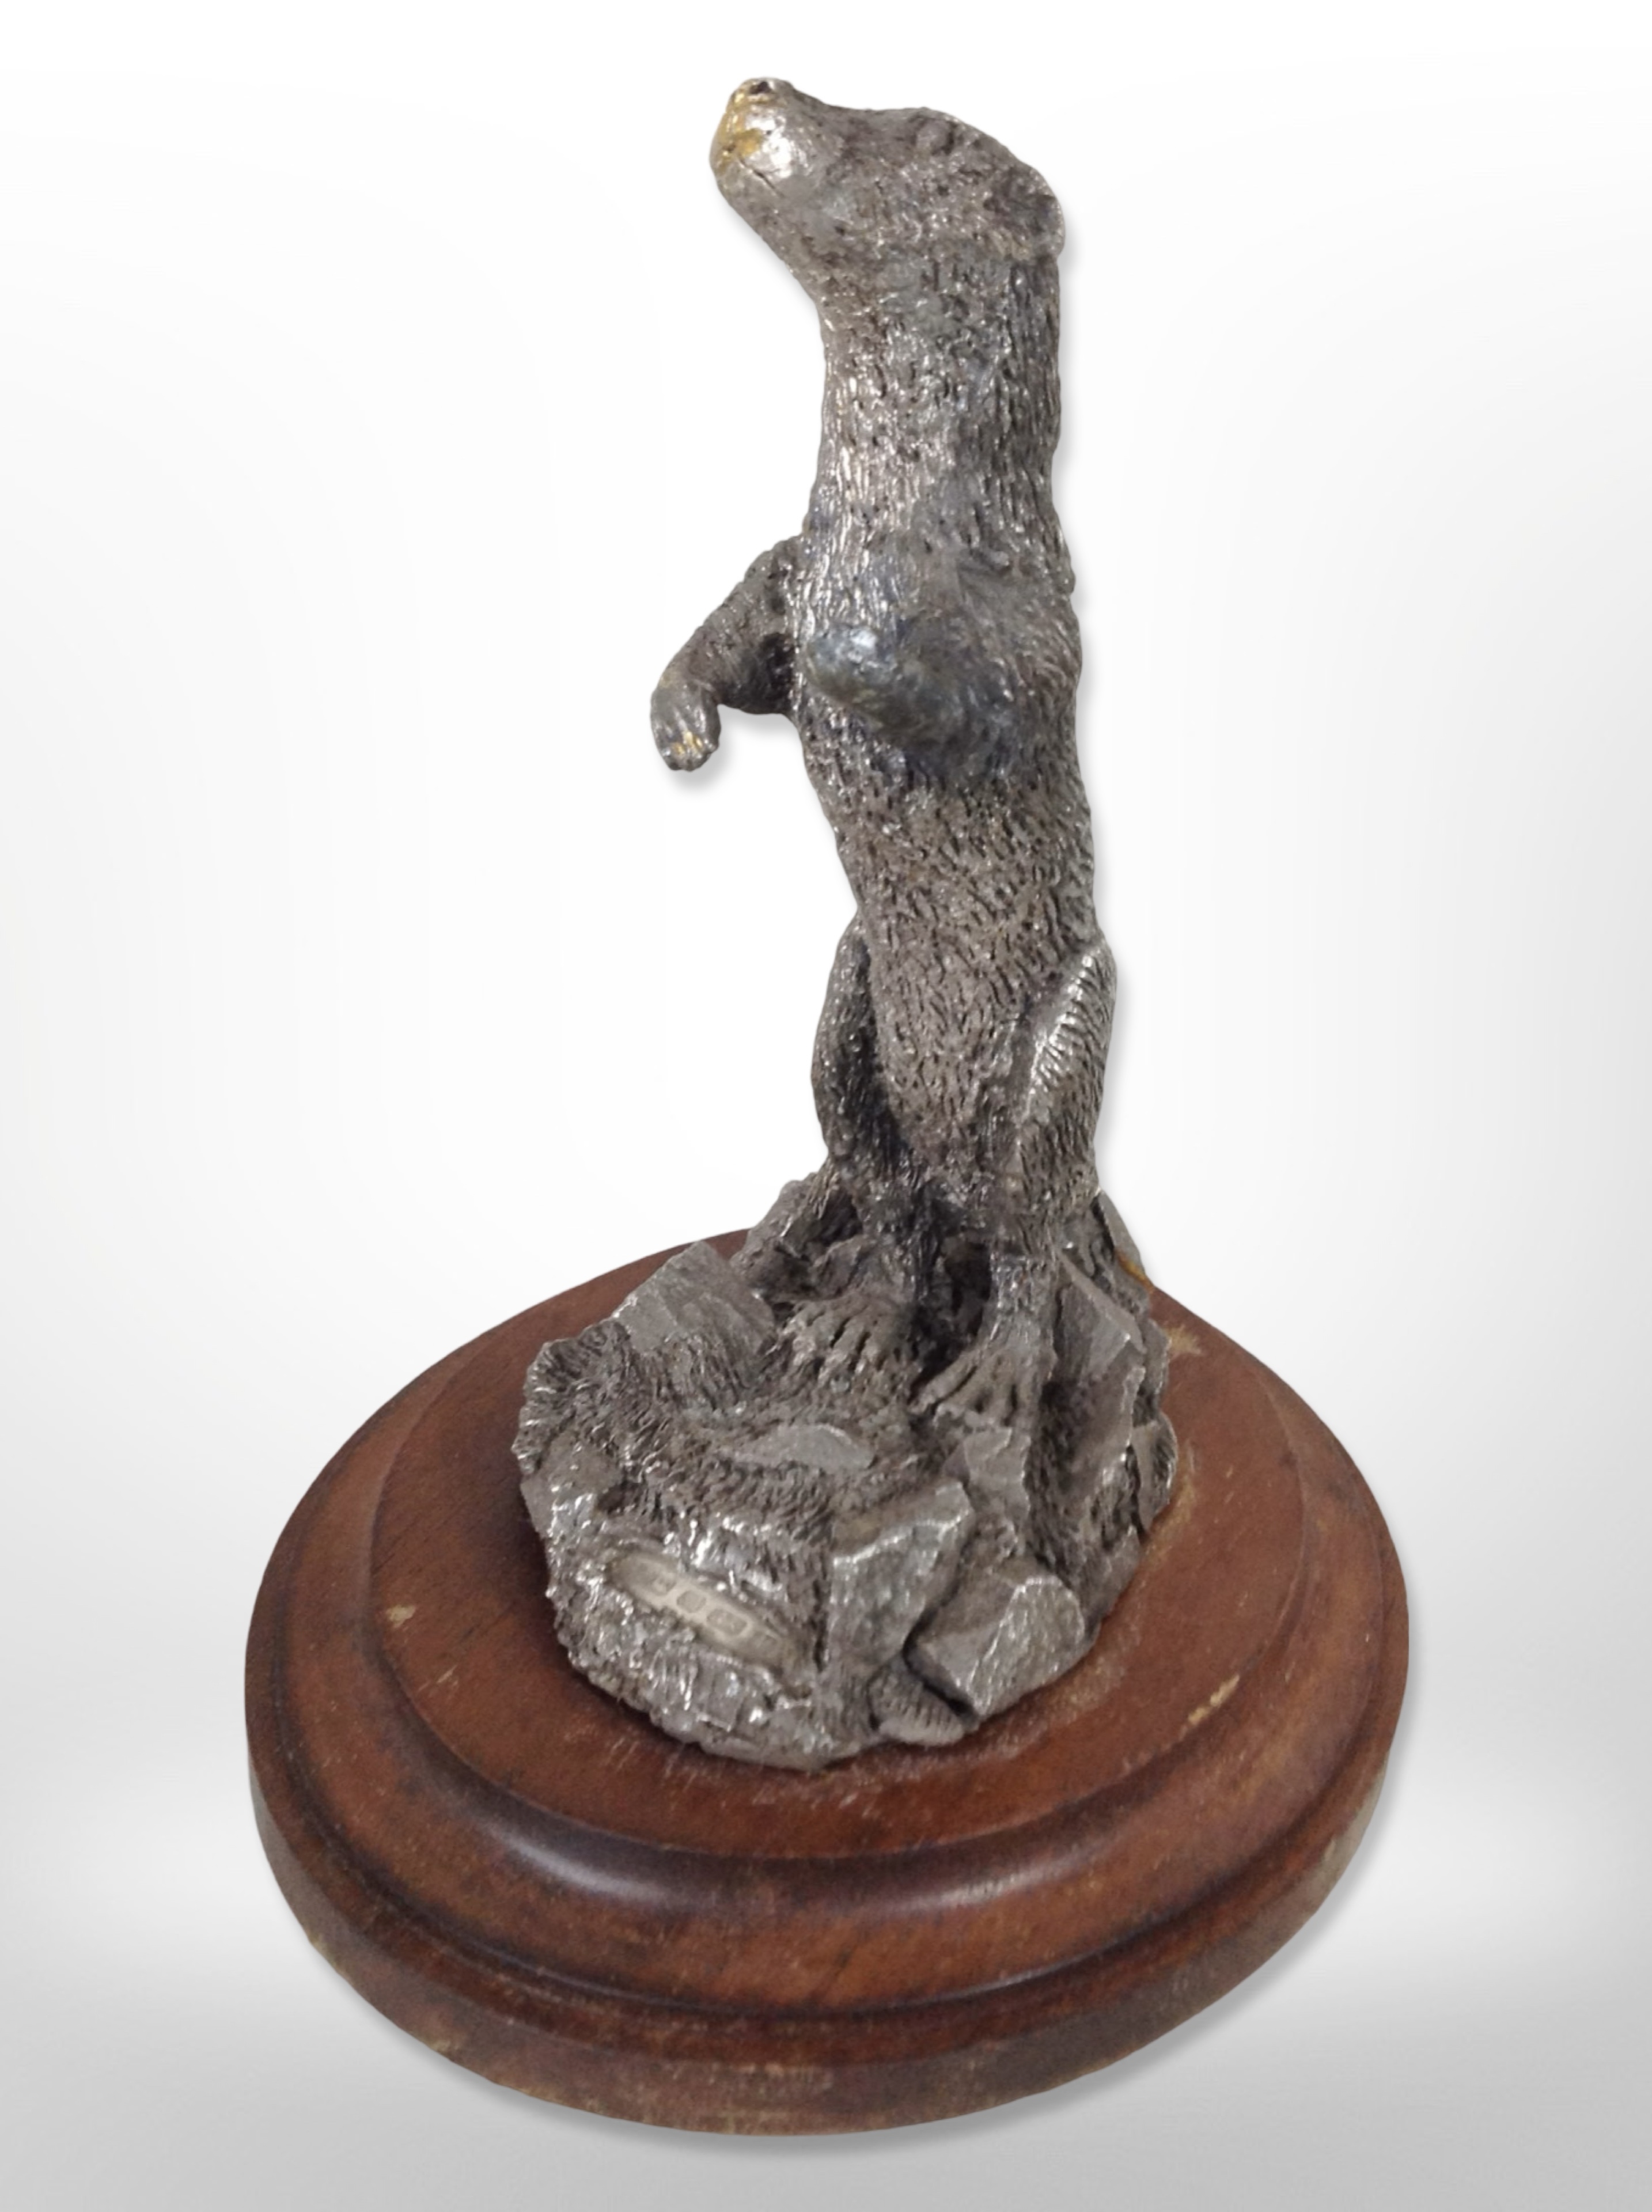 A modern filled-silver model of an otter on wooden plinth, Parkin Silversmiths Ltd, Sheffield 1986,